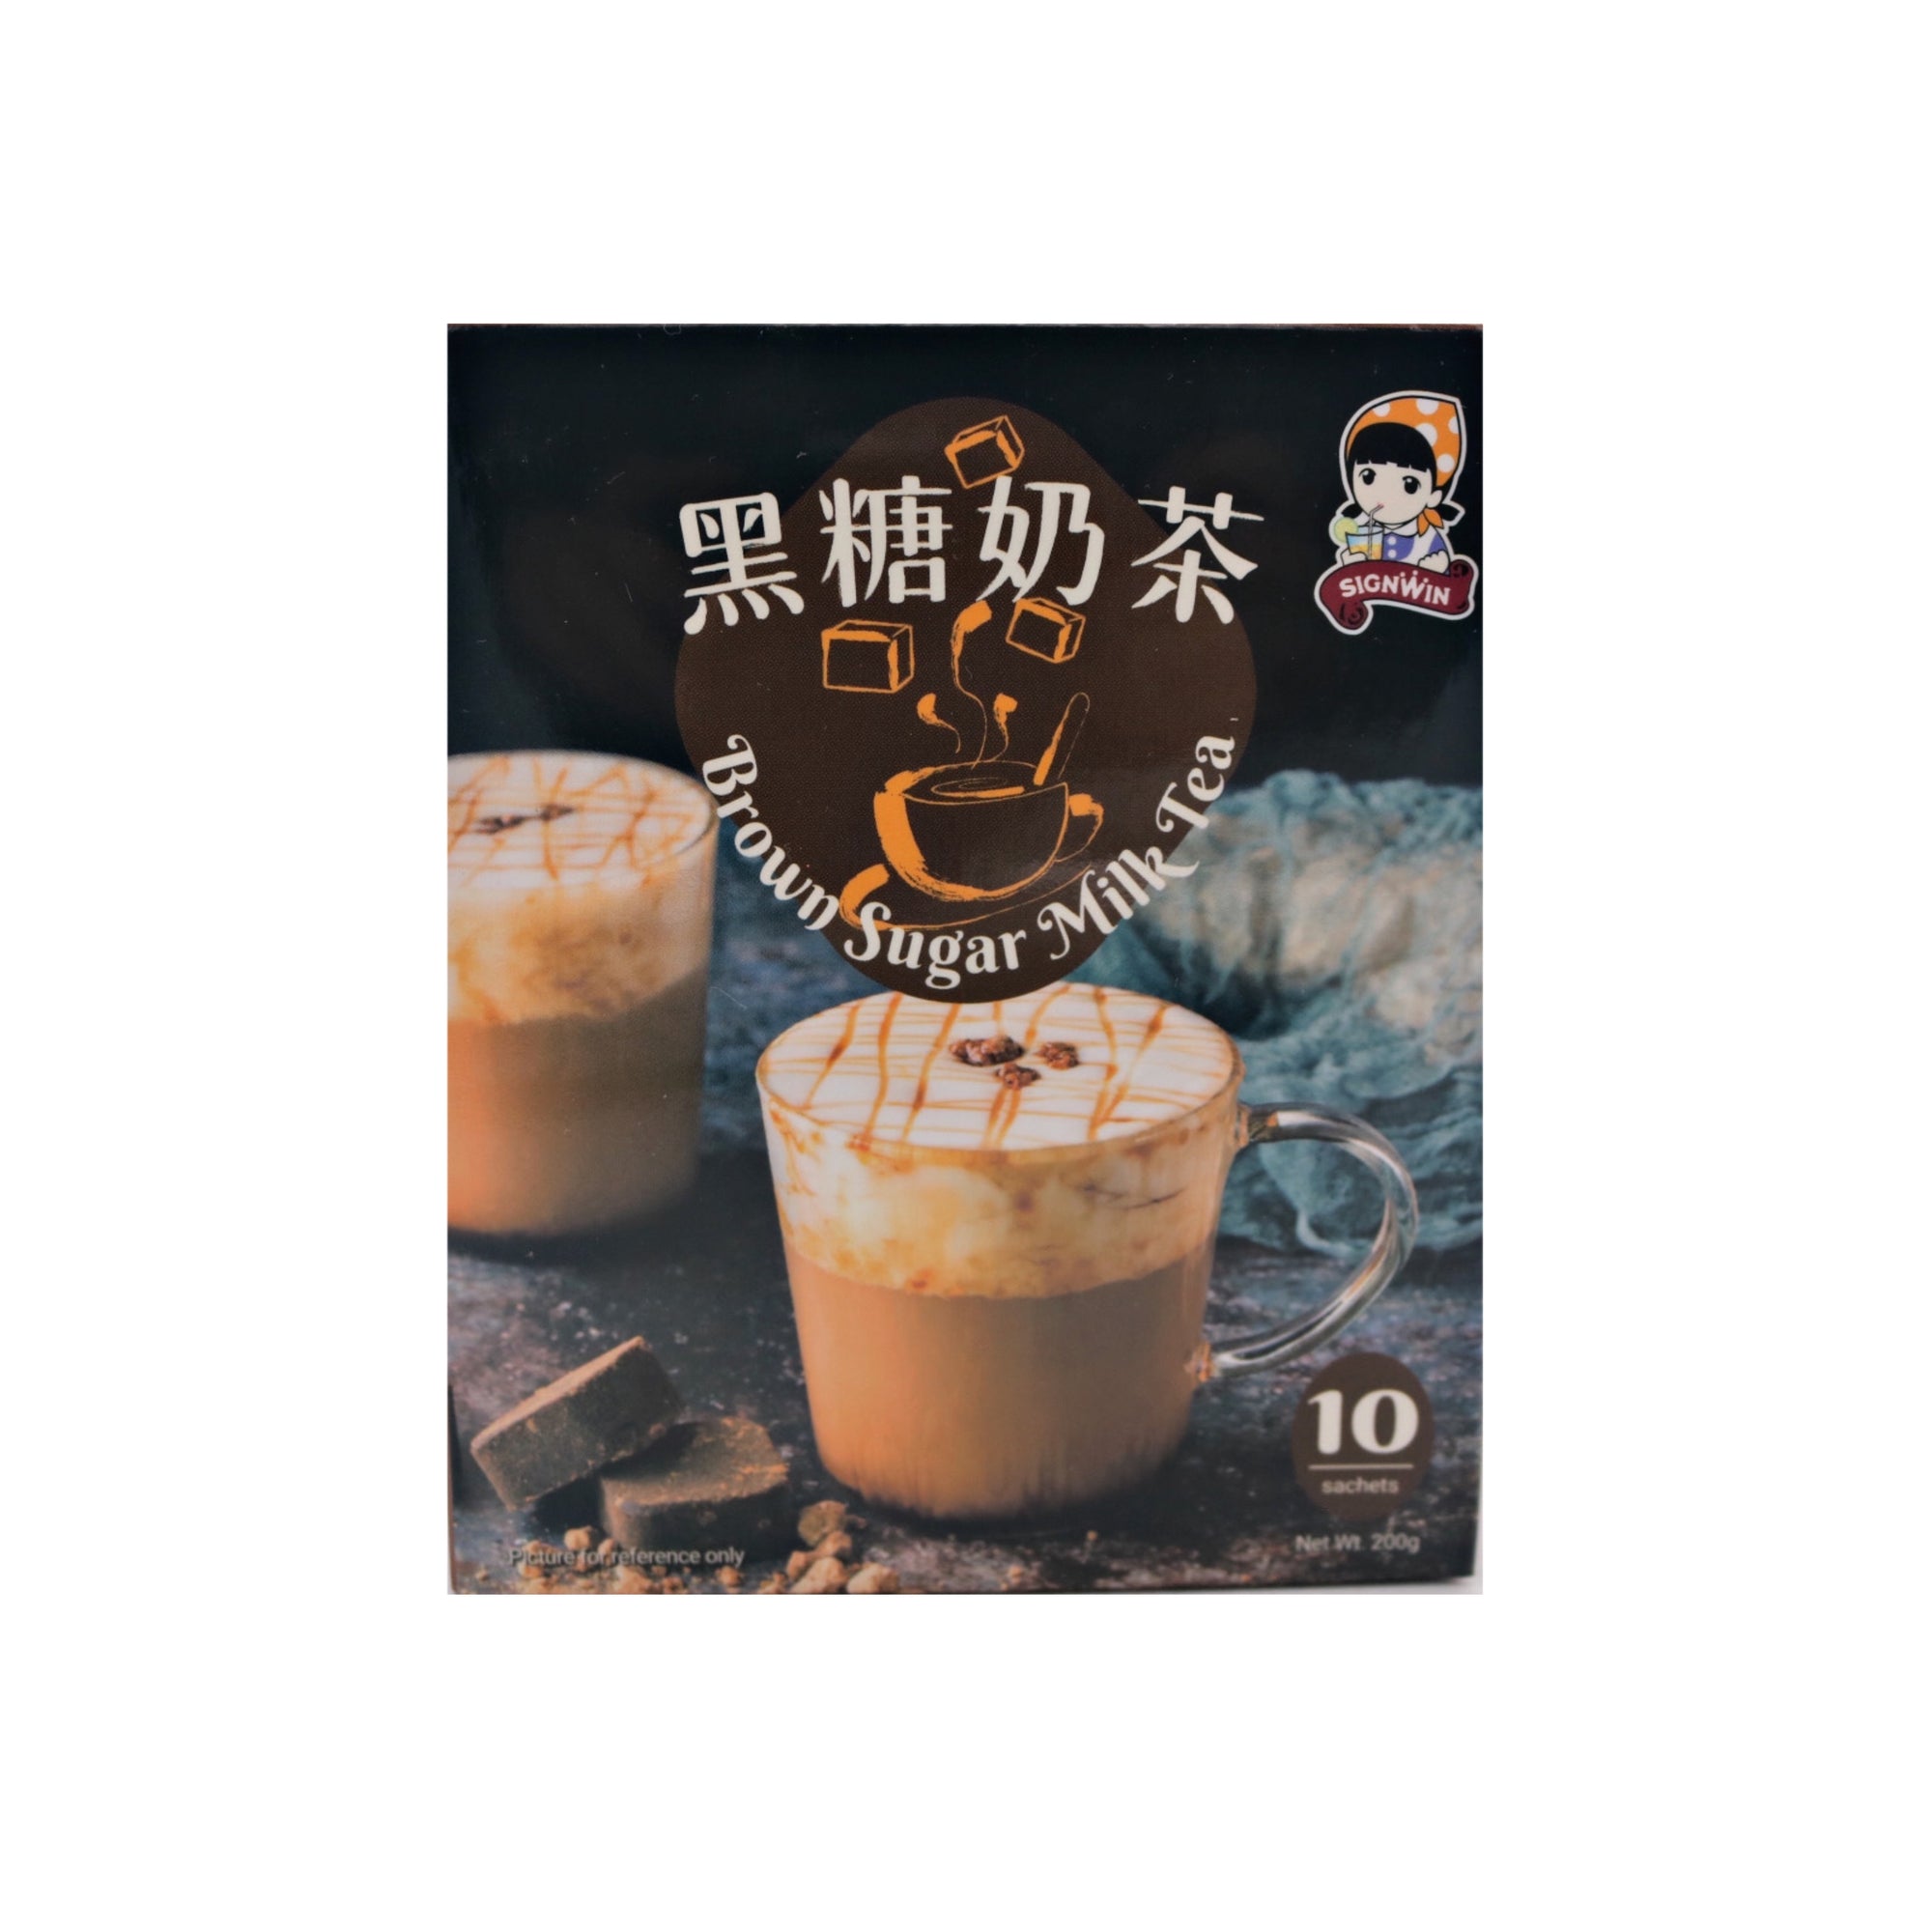 Signwin Brown Sugar Milk Tea Powder 三得冠黑糖奶茶 (20g*10bags) 200g